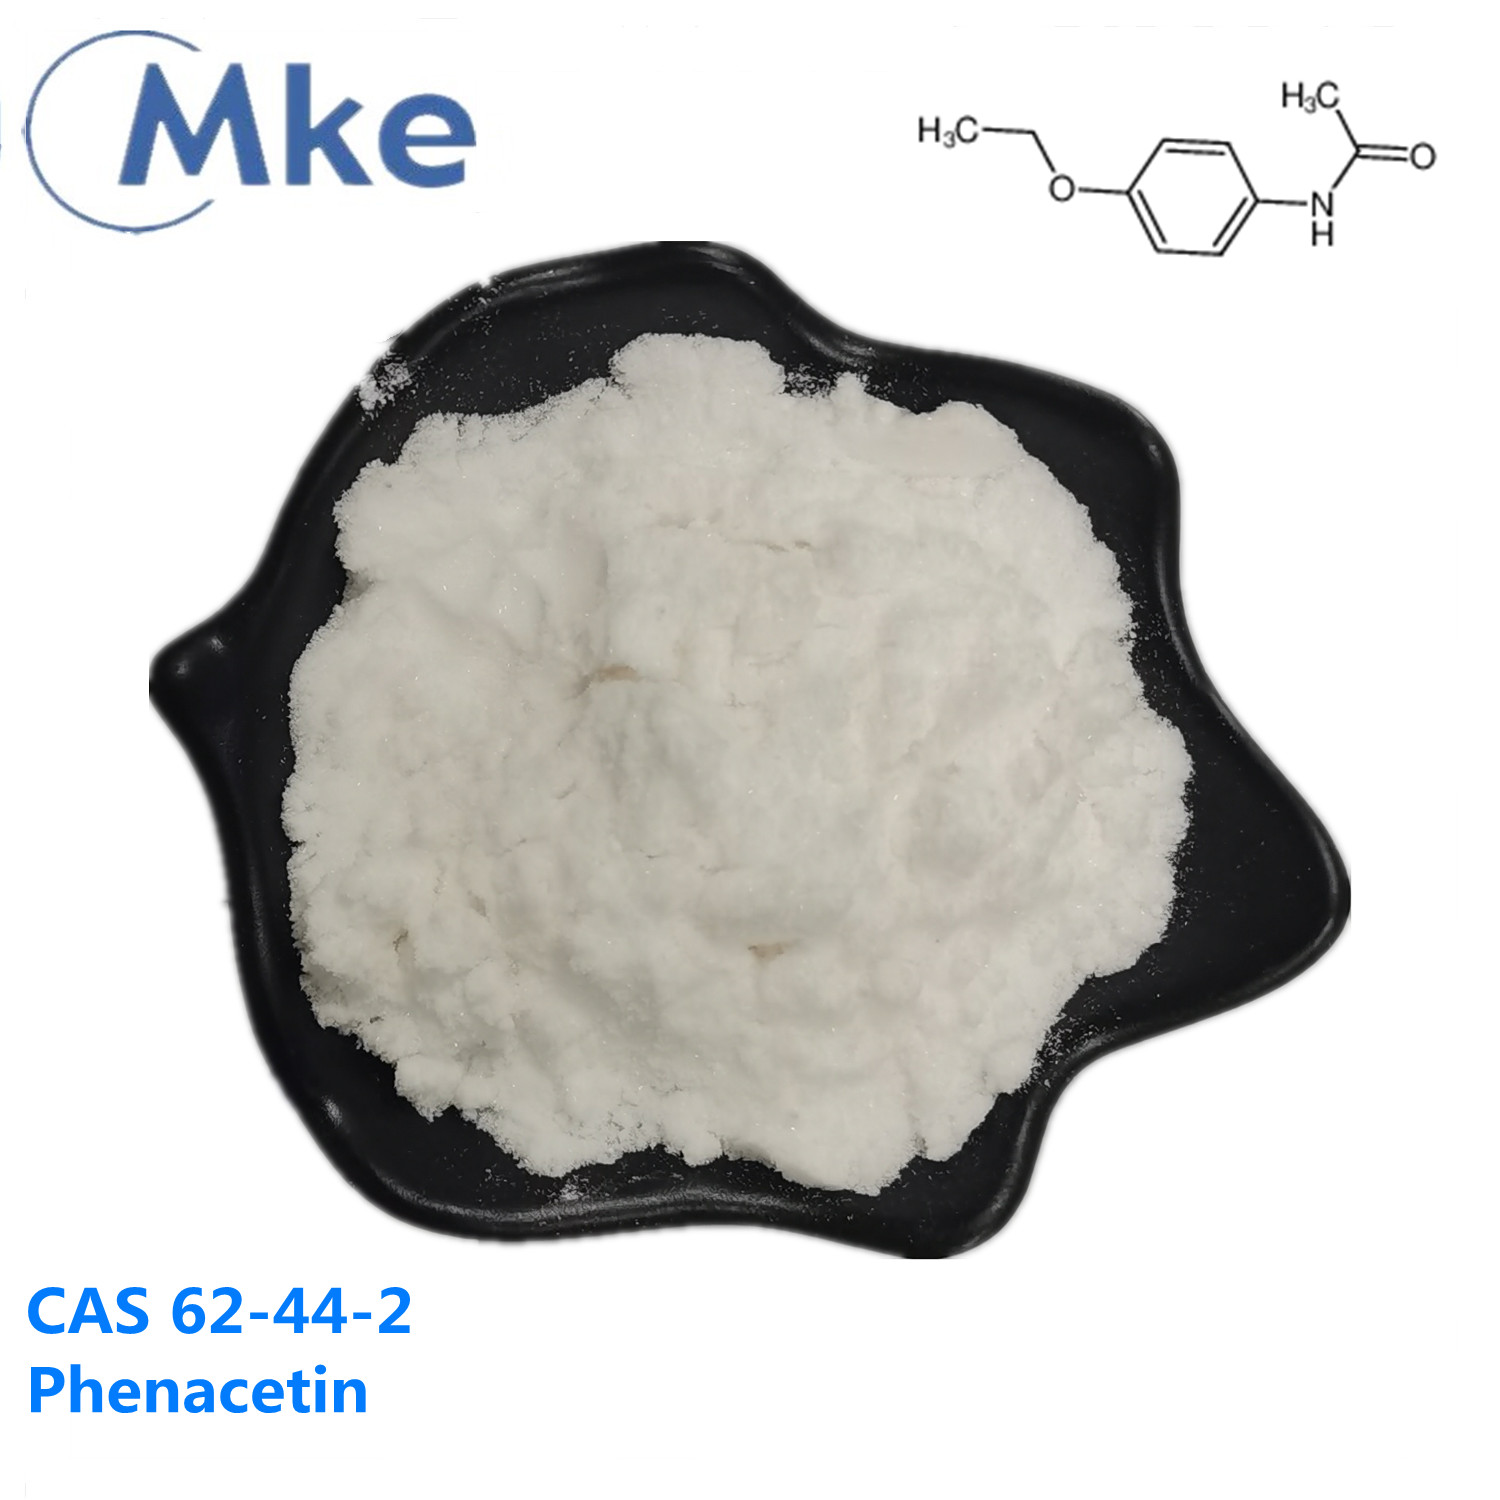 phenacetin/ acetphenetidin cas 62-44-2 shipped via secure line